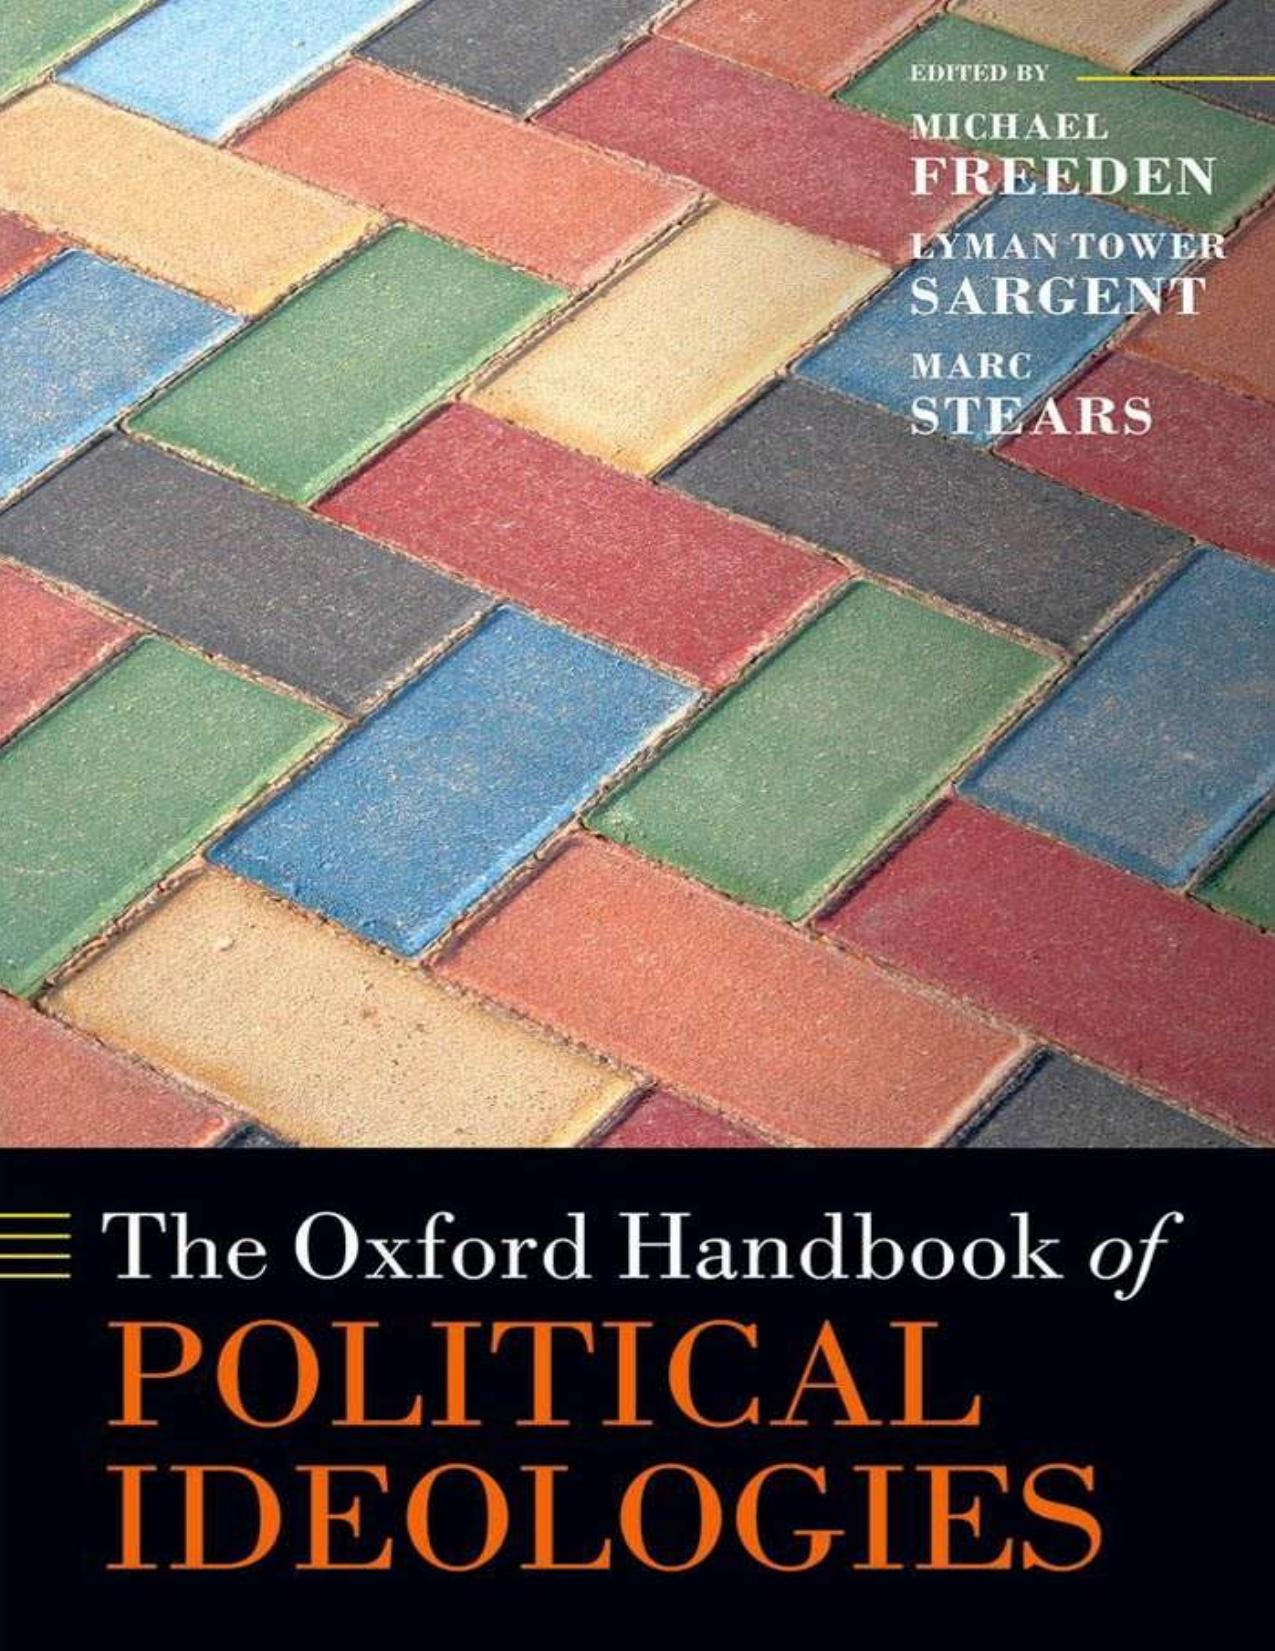 The Oxford Handbook of Political Ideologies (Oxford Handbooks in Politics & International Relations)